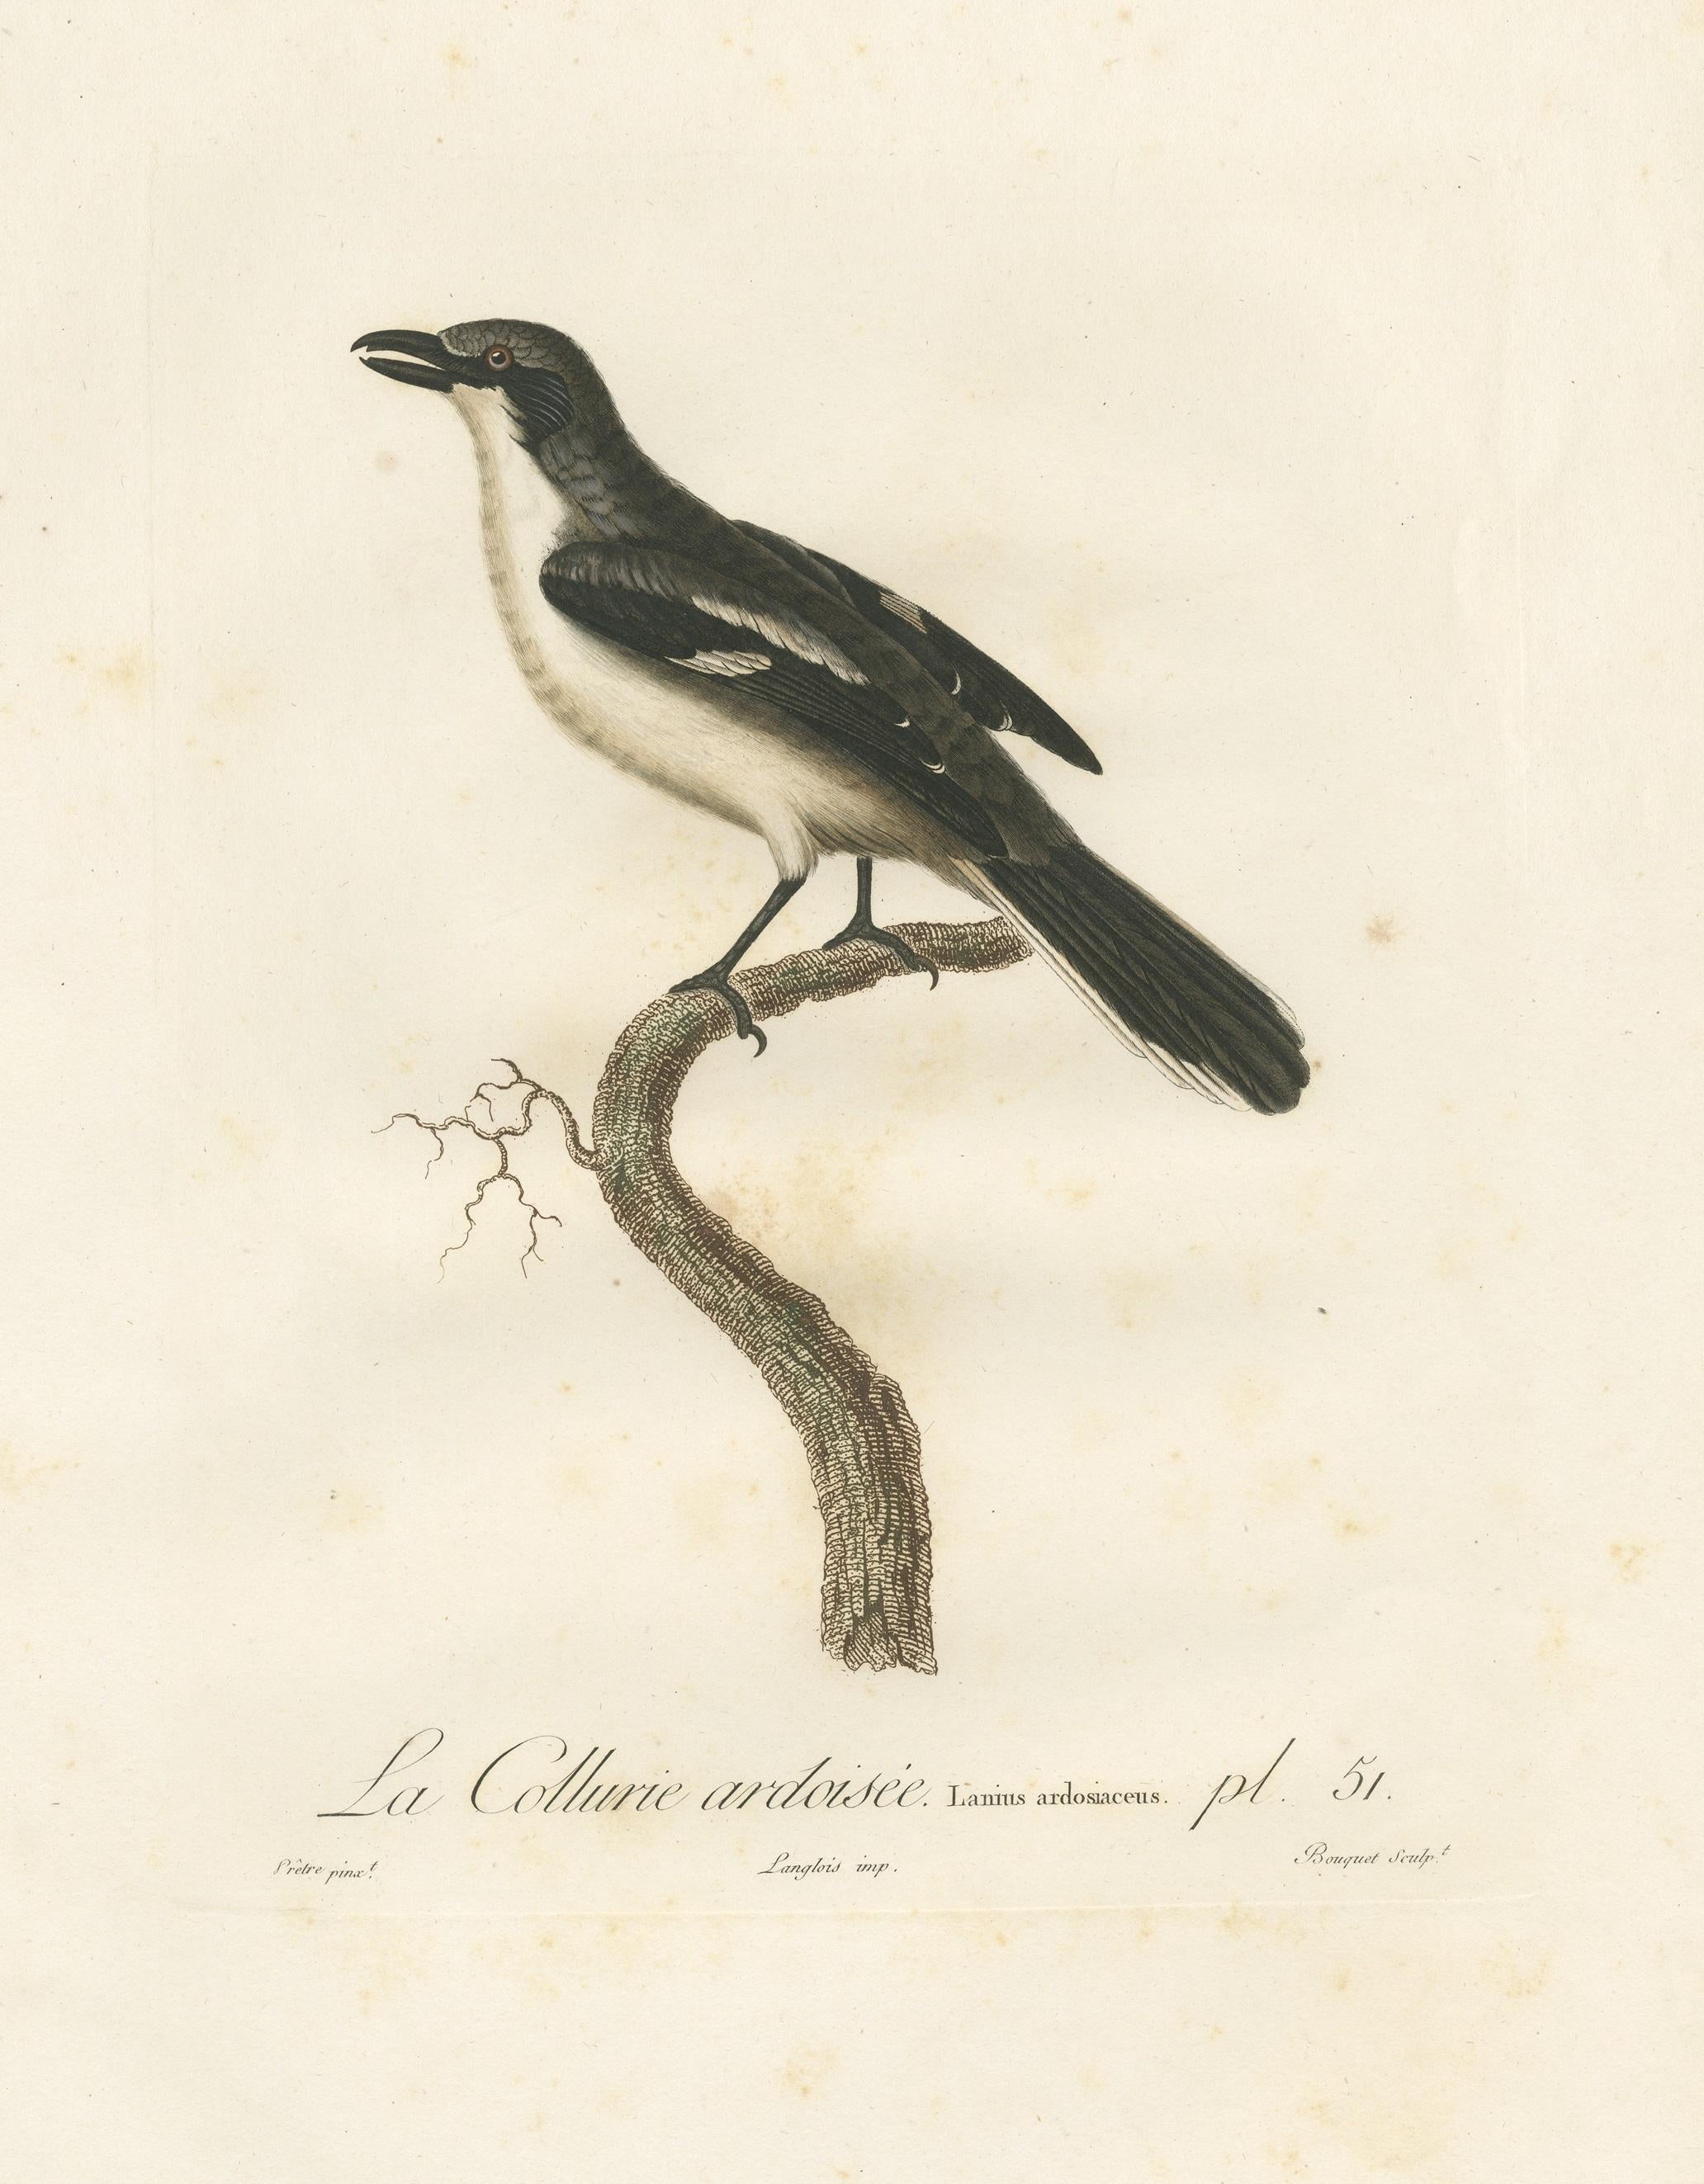 Paper Original Shrike Illustration - 'La Collurie ardoisée' Handcolored Print, 1807 For Sale